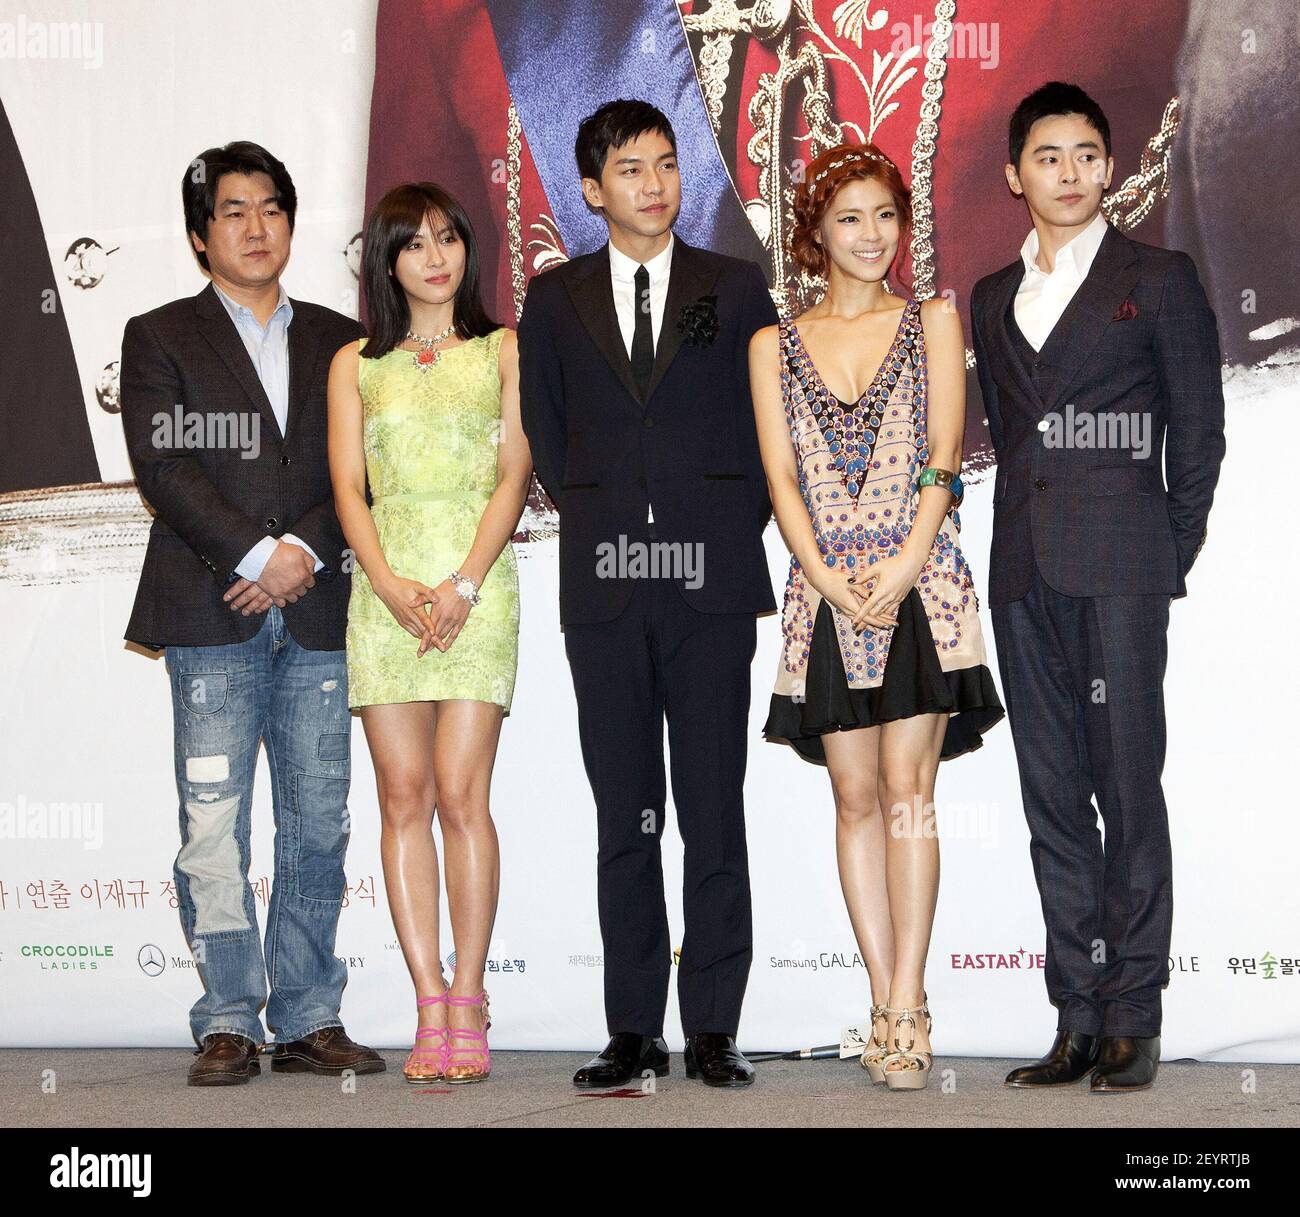 8 March 2012 - Seoul, South Korea - (L-R) South Korean actor Yoon Jae-Moon,  actress Ha Ji-Won, actor and singer Lee Seung-Gi, actress Lee Yoon-Ji and  actor Jo Jung-Suk, attend a photo